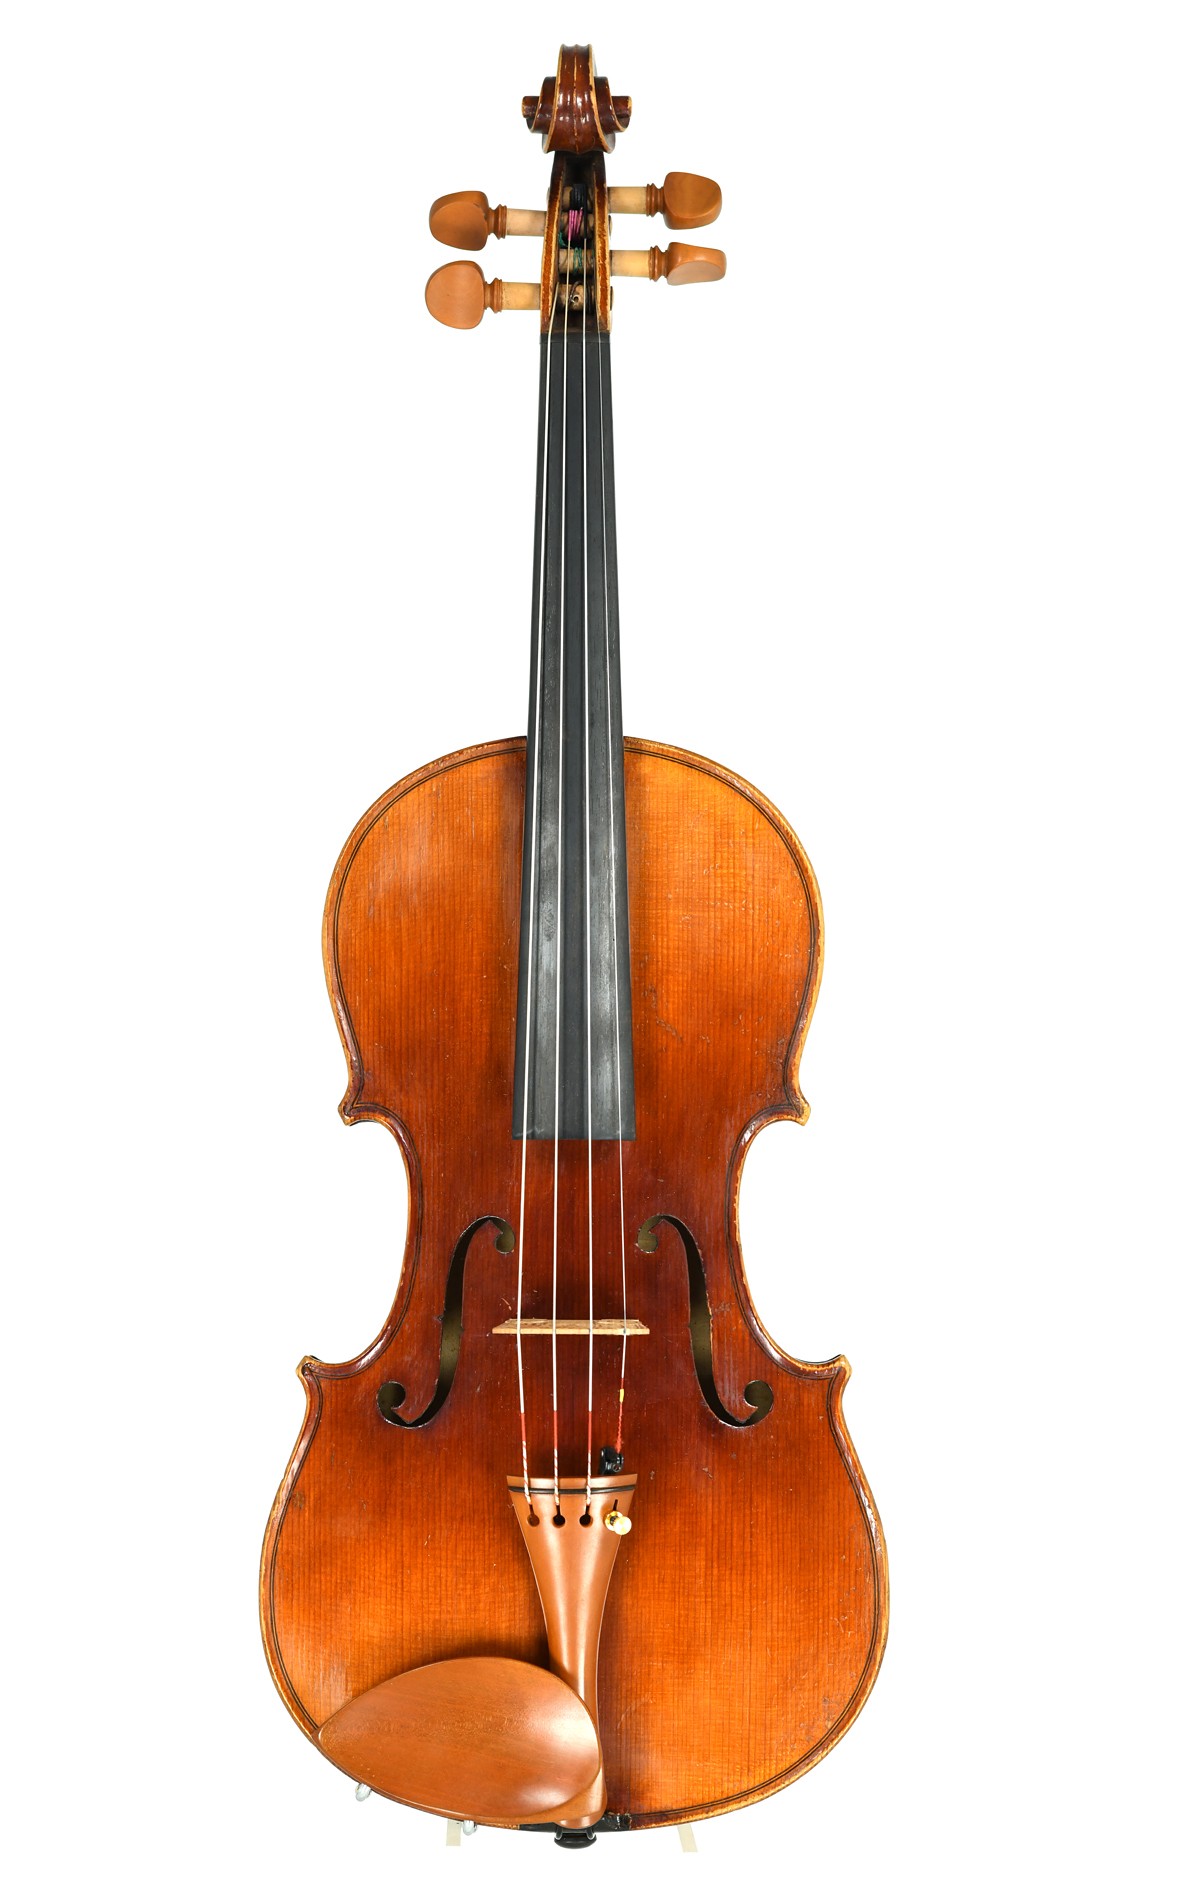 Mittenwald violin 1900ies - top